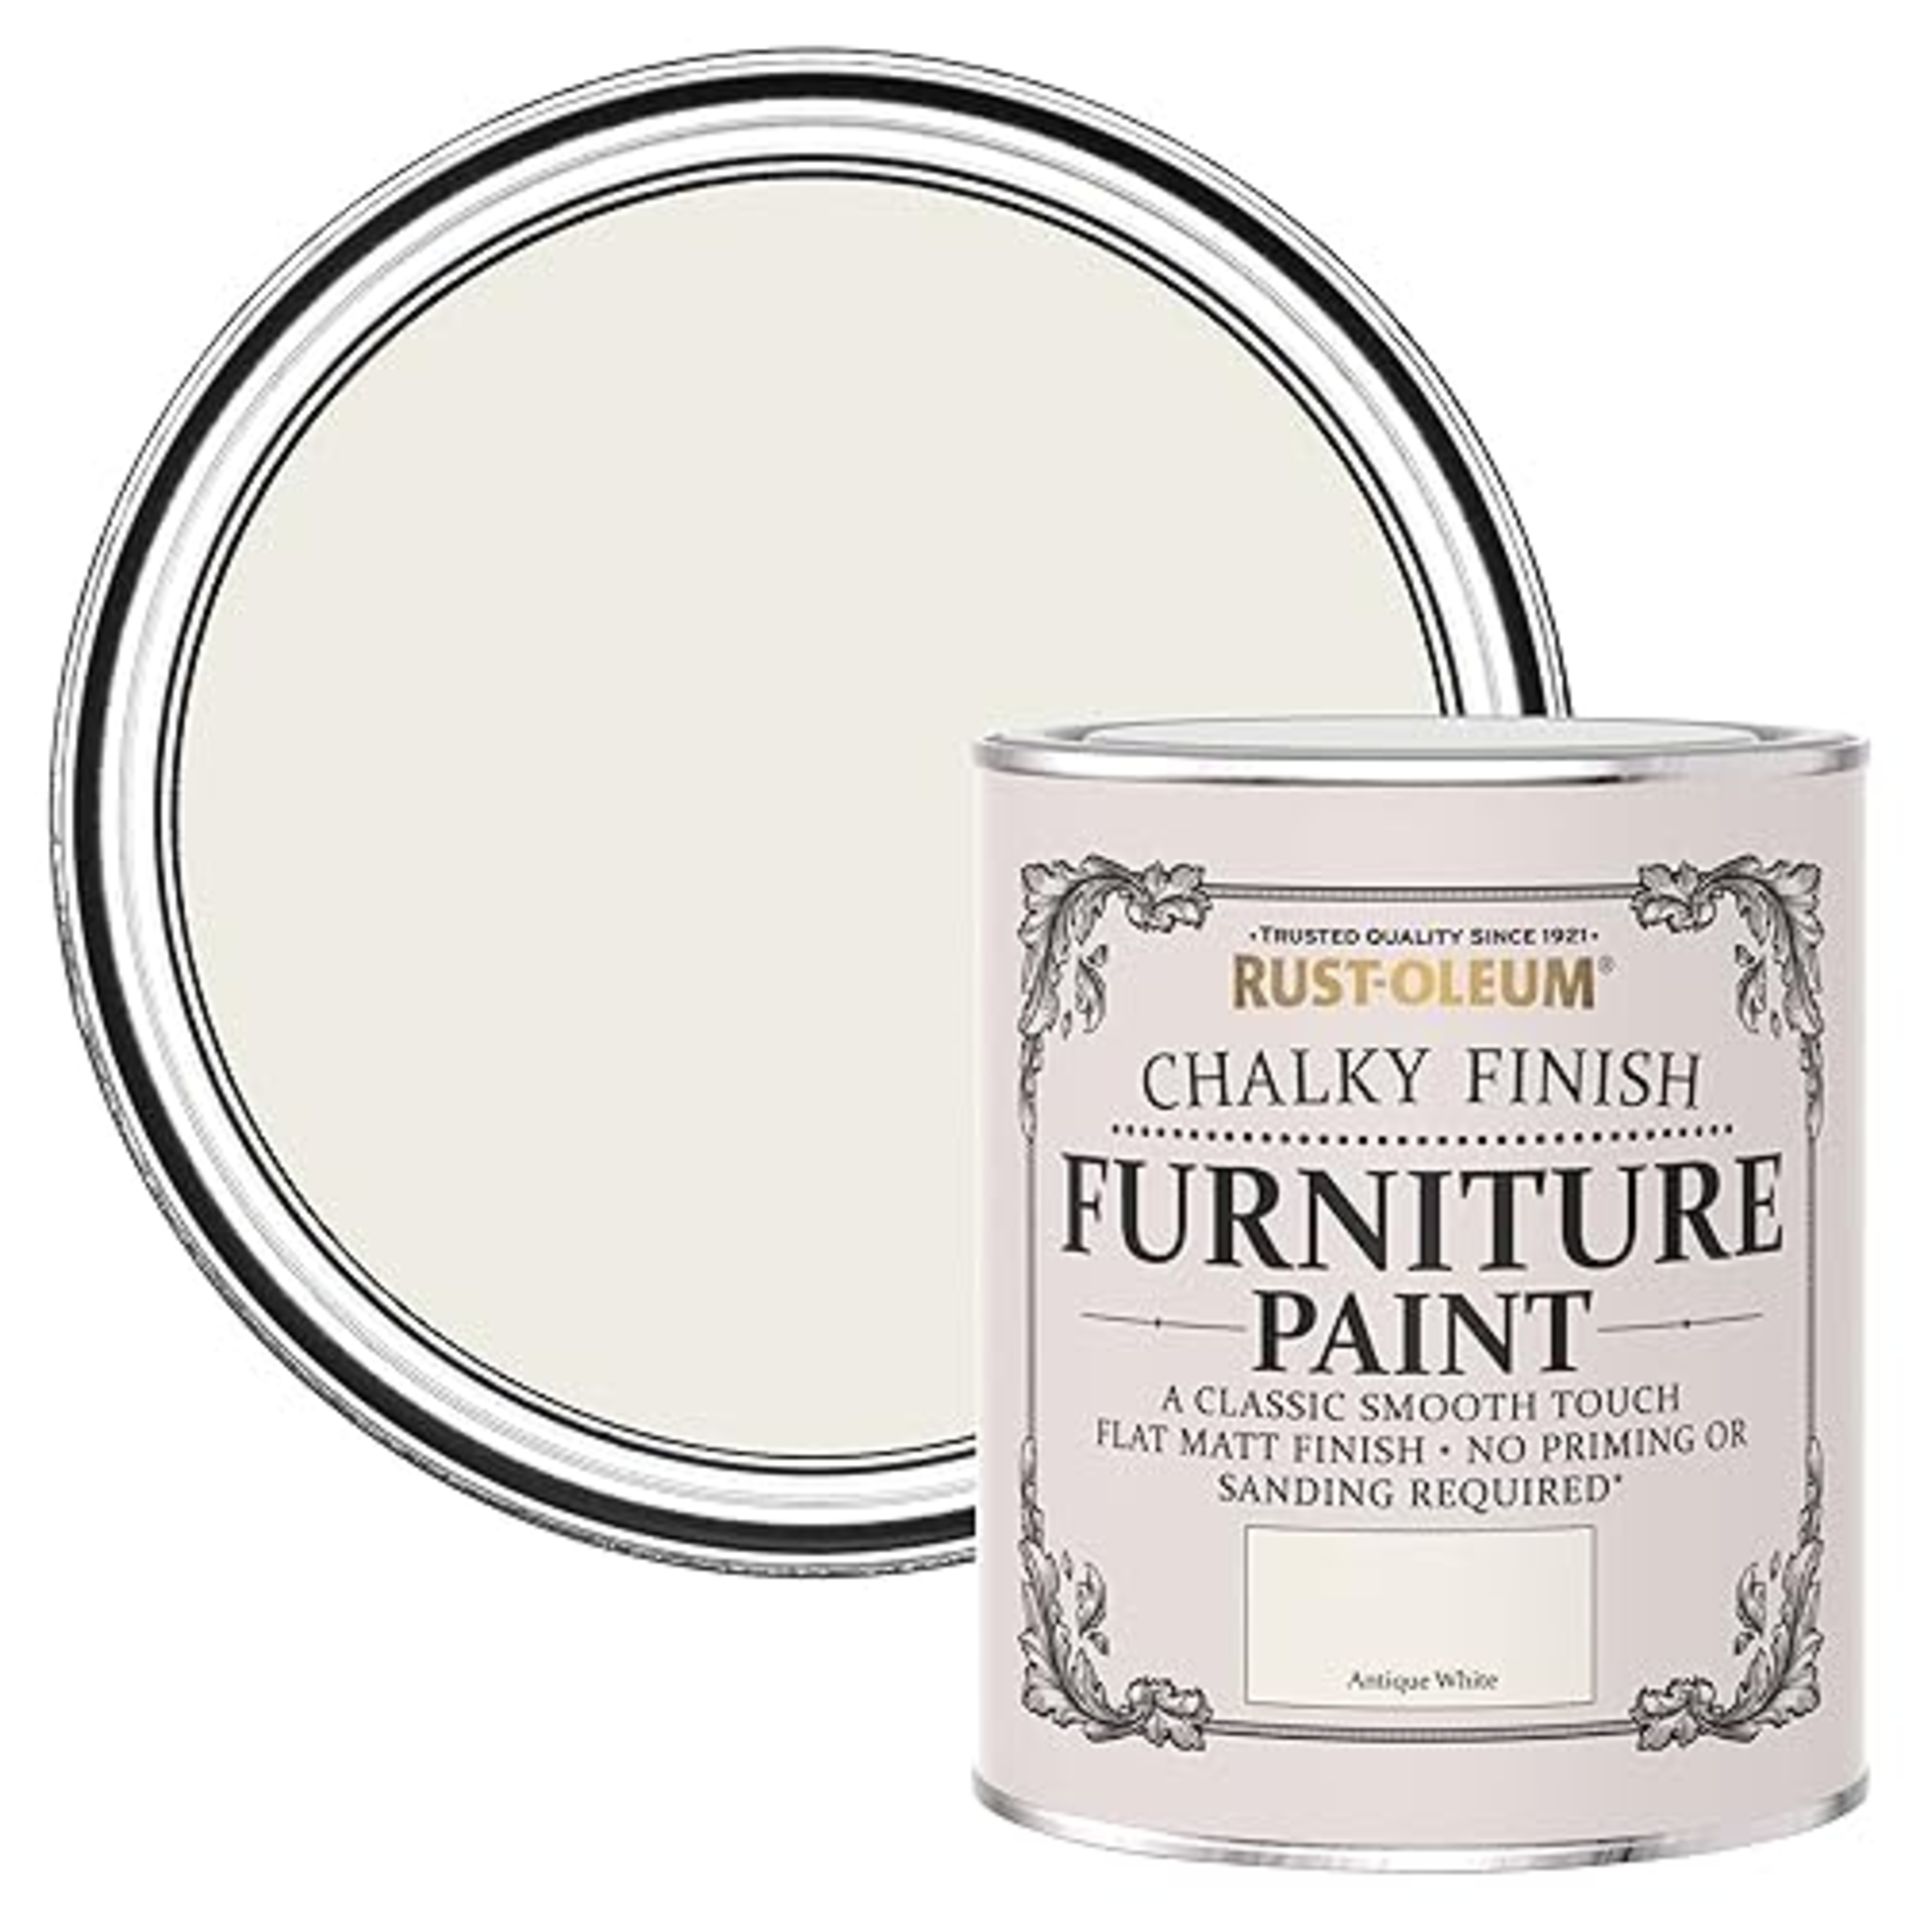 Rust-Oleum AMZ0012 Chalky Finish Furniture Paint - Antique White - 750ml